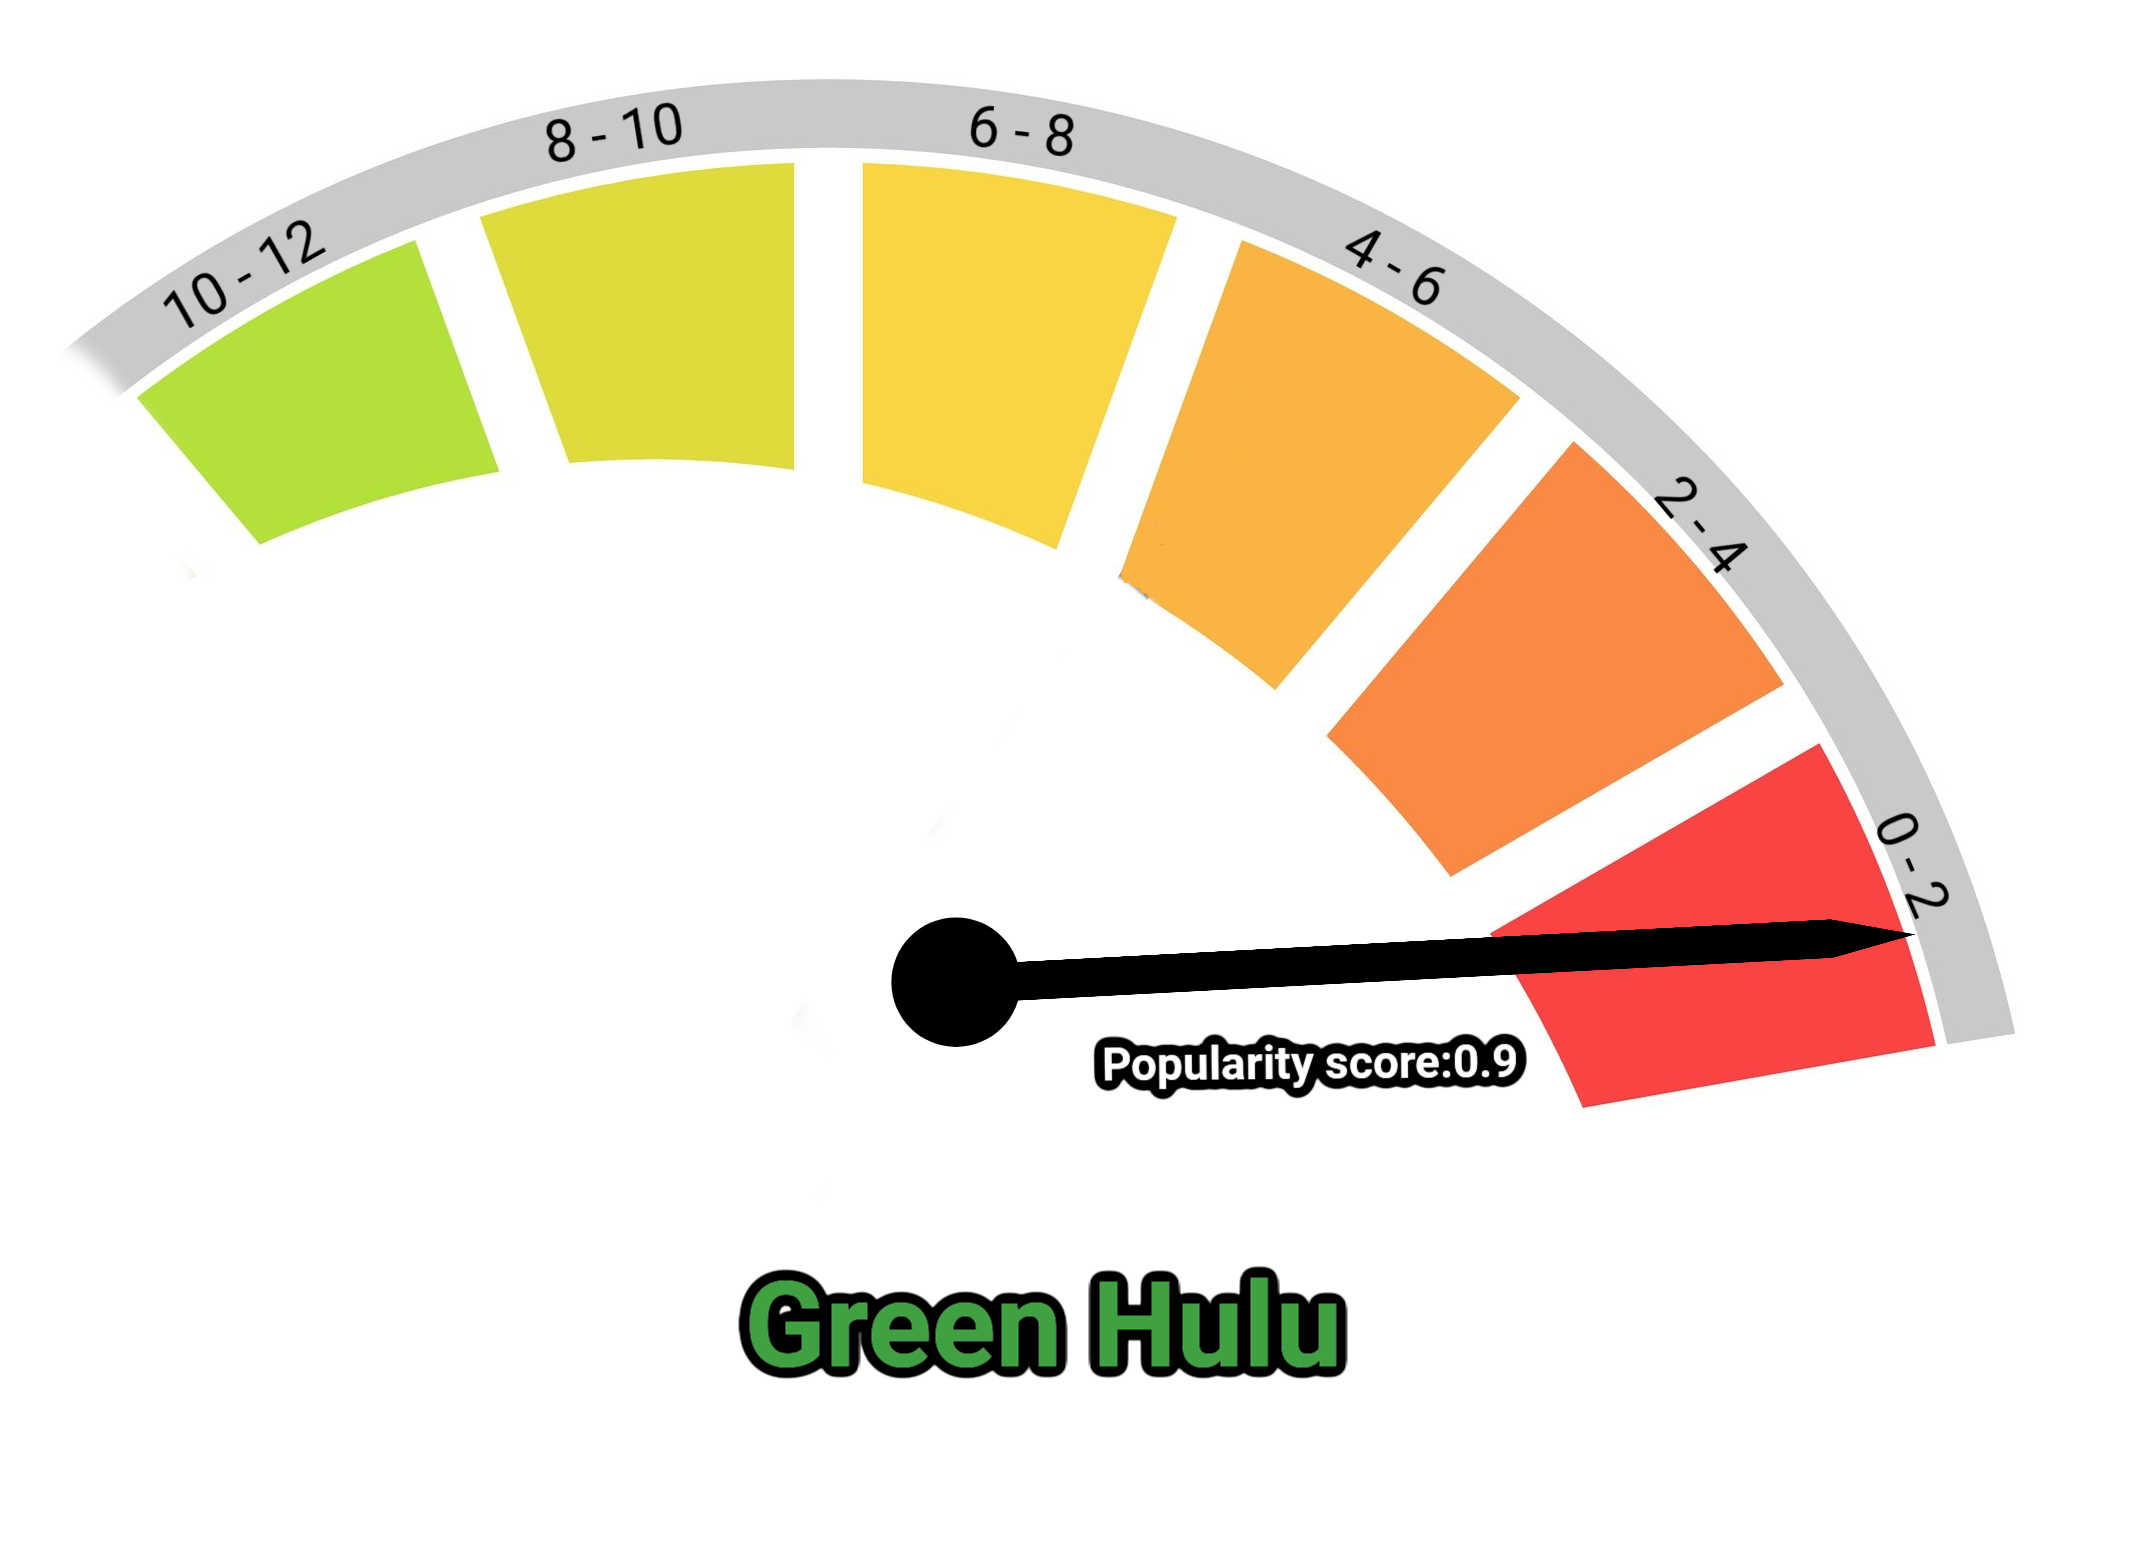 image of green hulu kratom popularity score